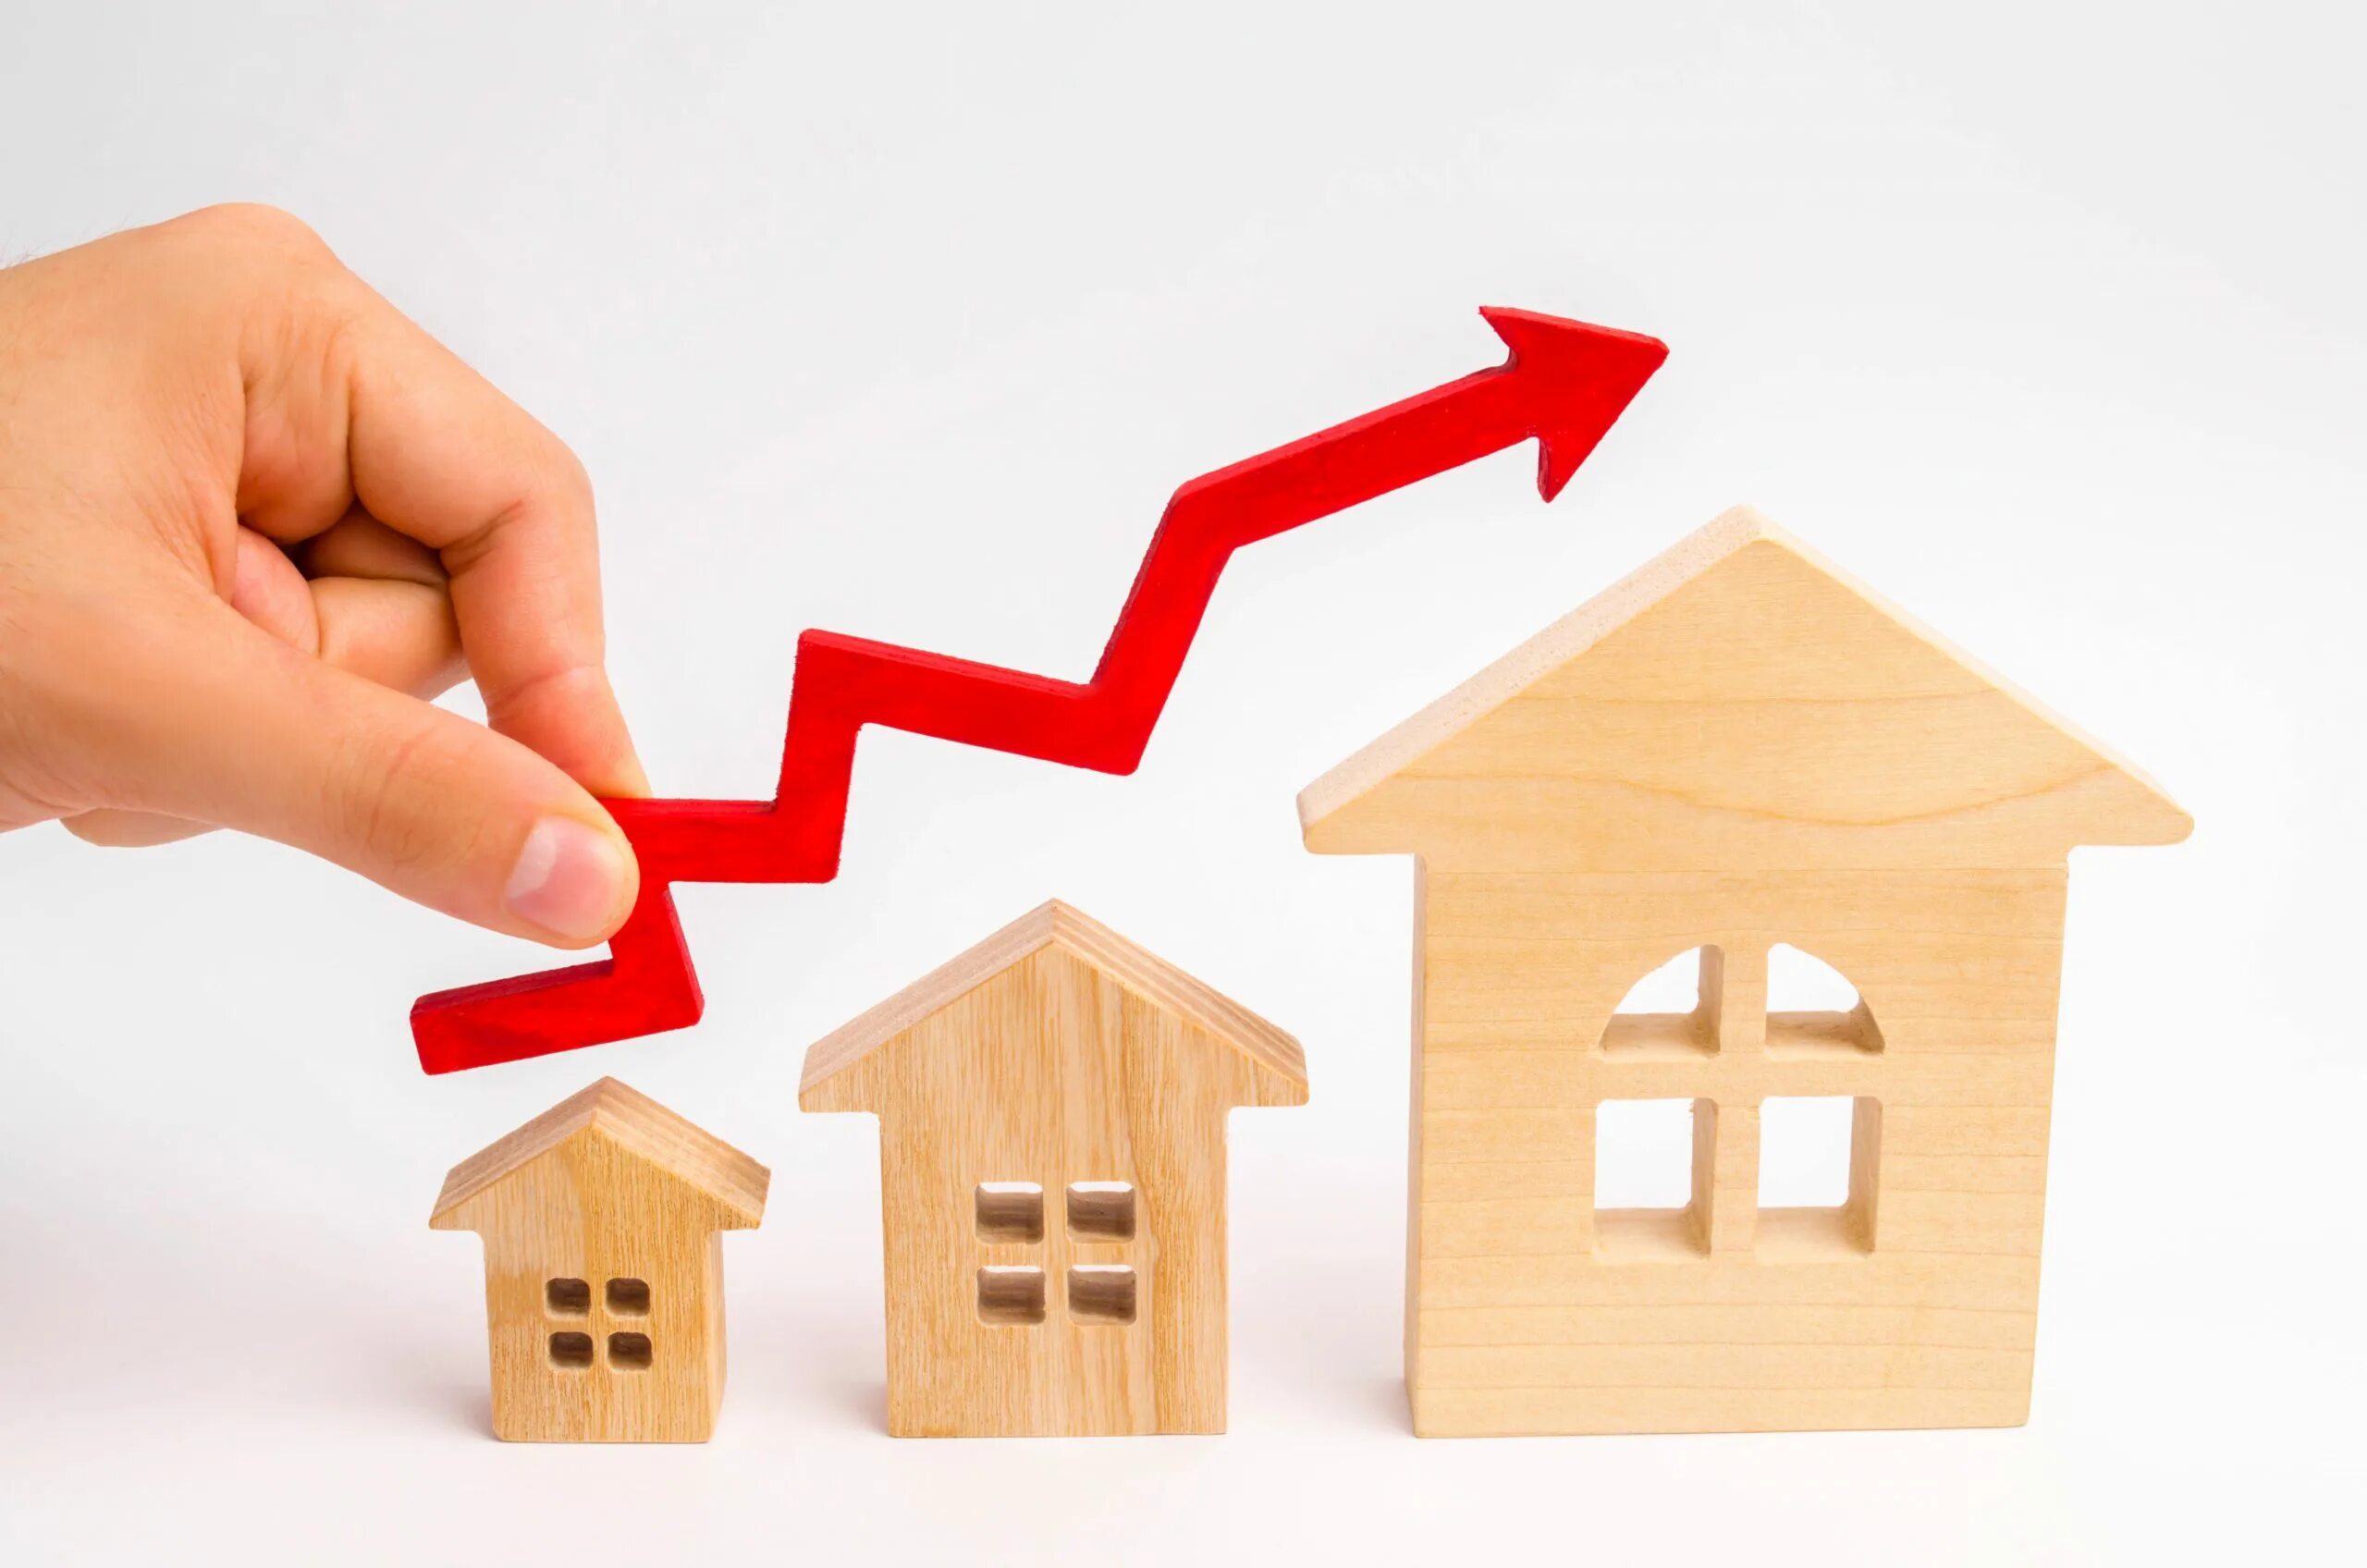 To higher costs in the. Ранок недвижимости инвестиции. Строительная рента это. Малый спрос недвижимость картинка. Today Home Mortgage interest rate.